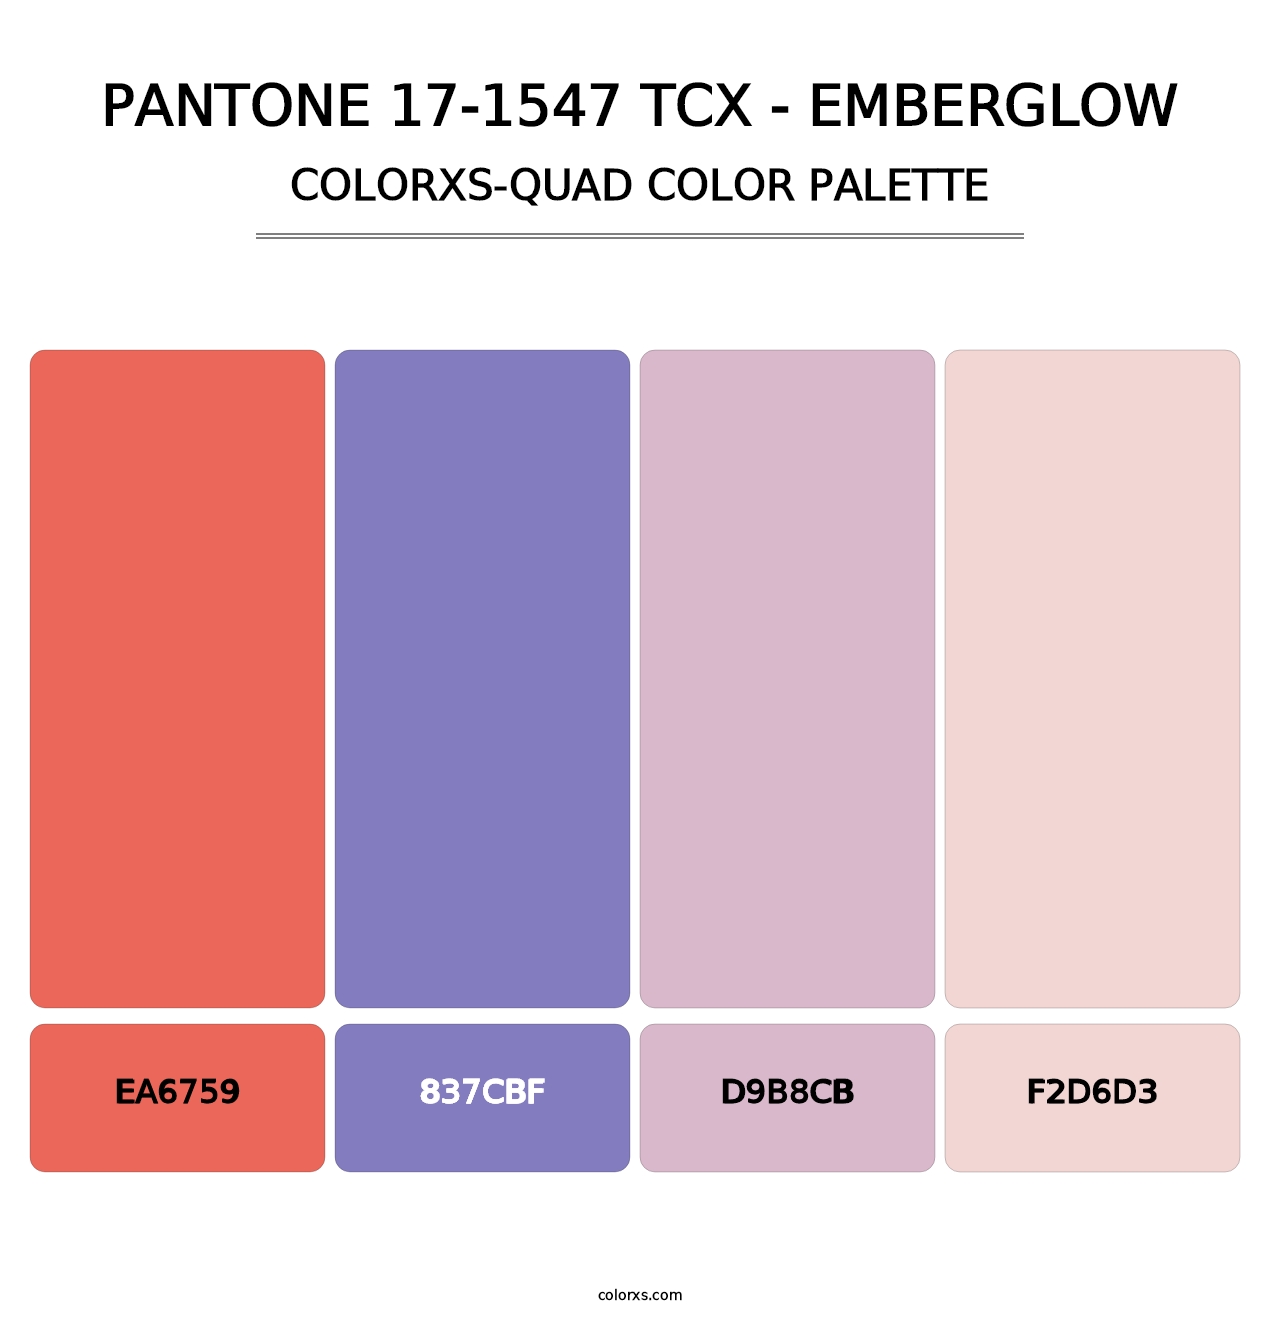 PANTONE 17-1547 TCX - Emberglow - Colorxs Quad Palette